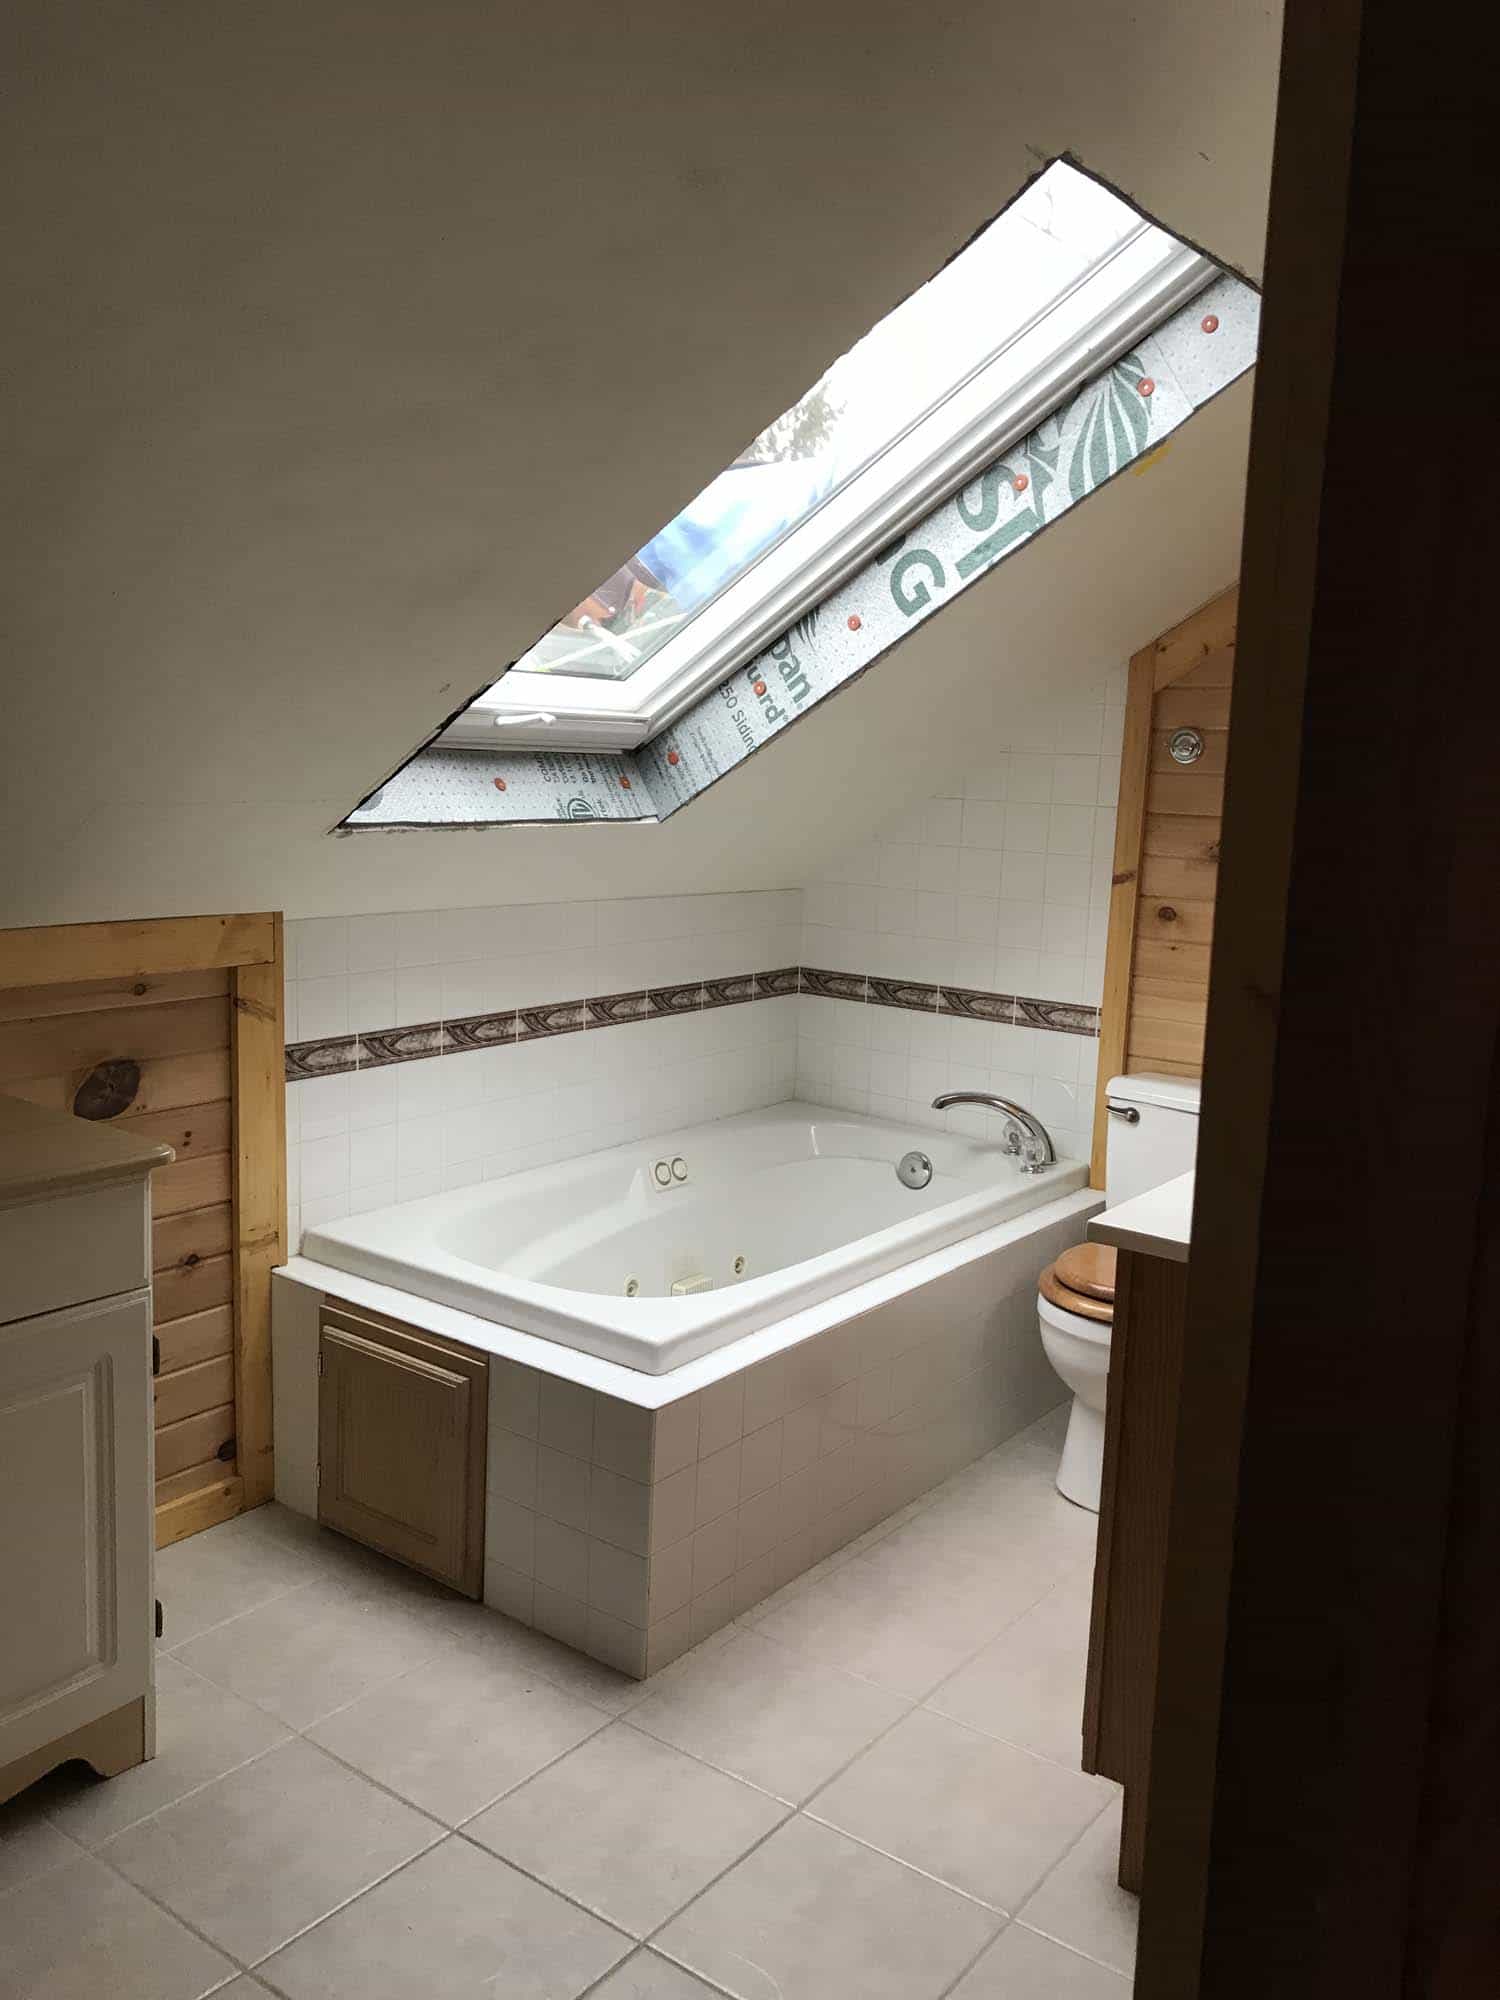 Rectangular skylight overlooks a bathtub